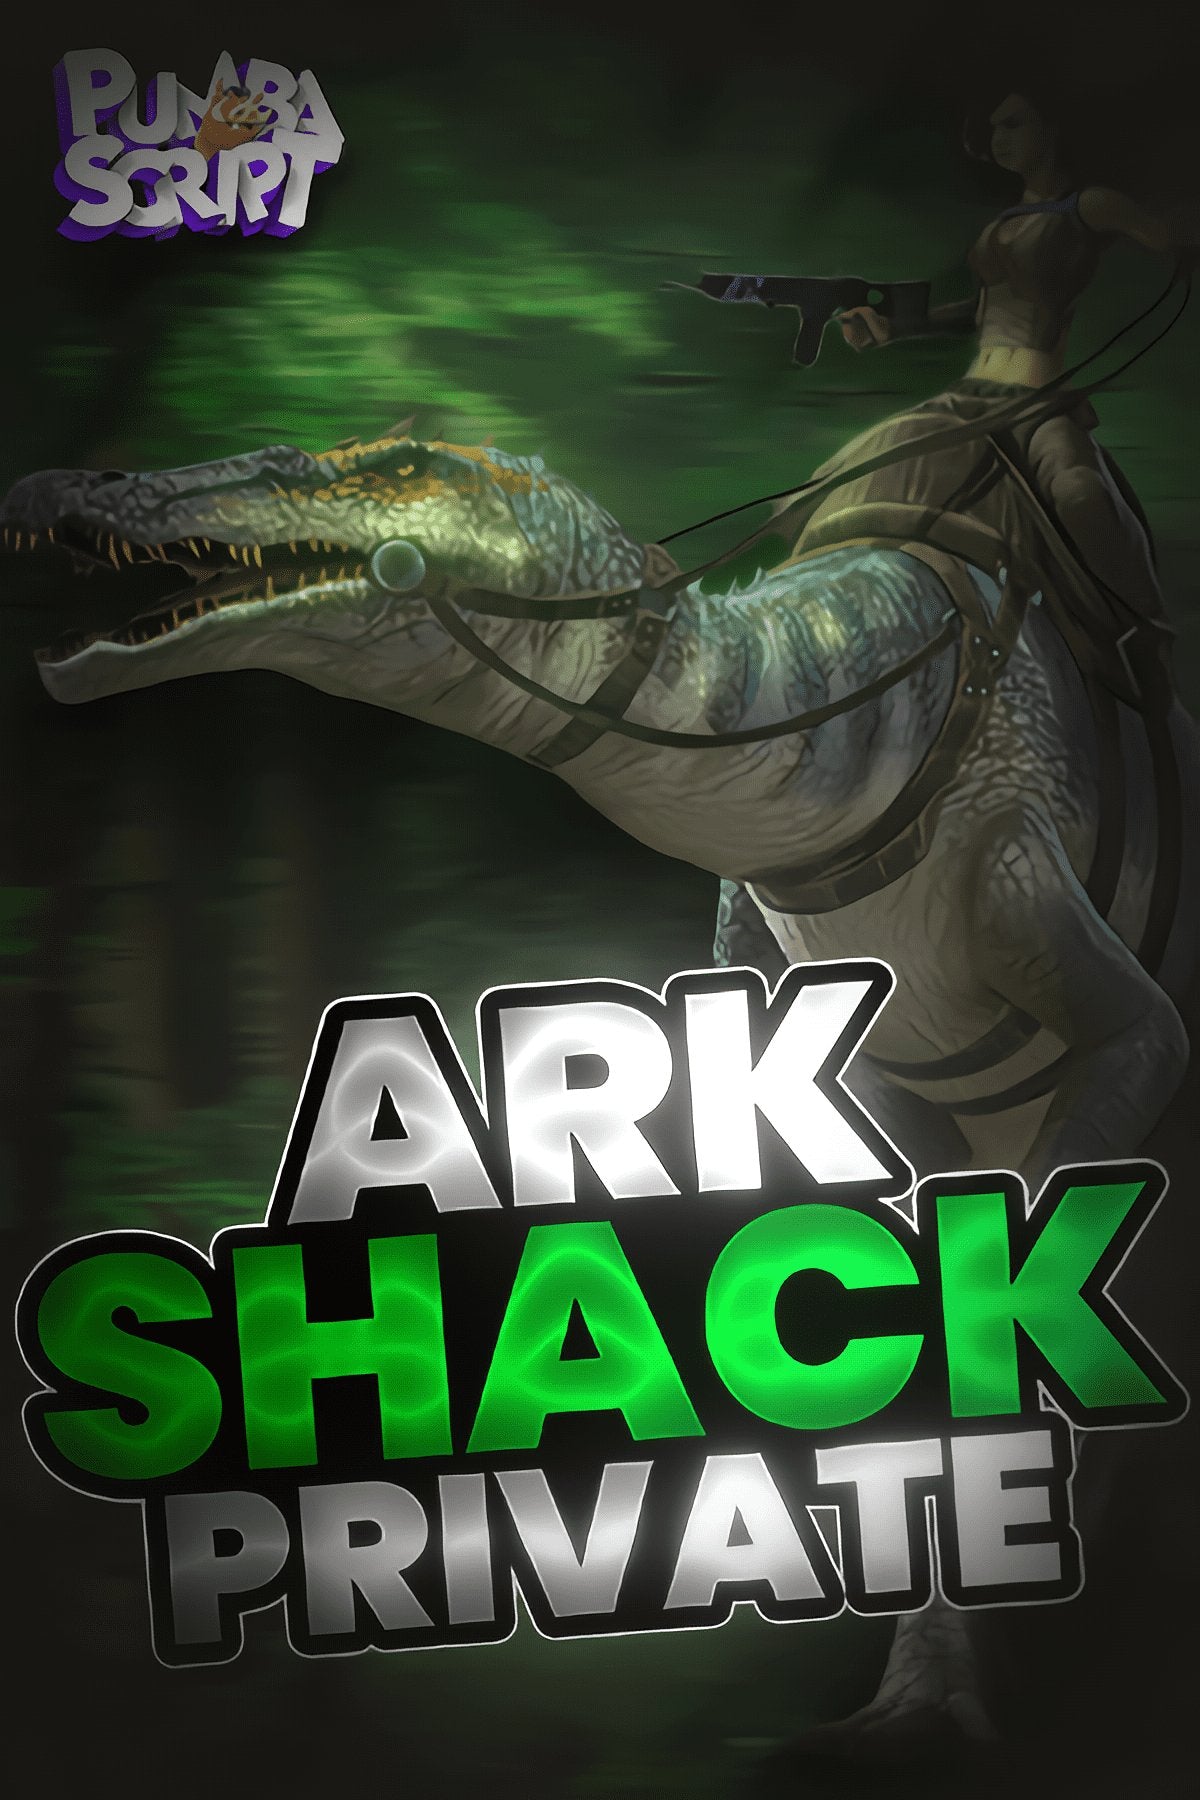 ARK SHACK PRIVATE